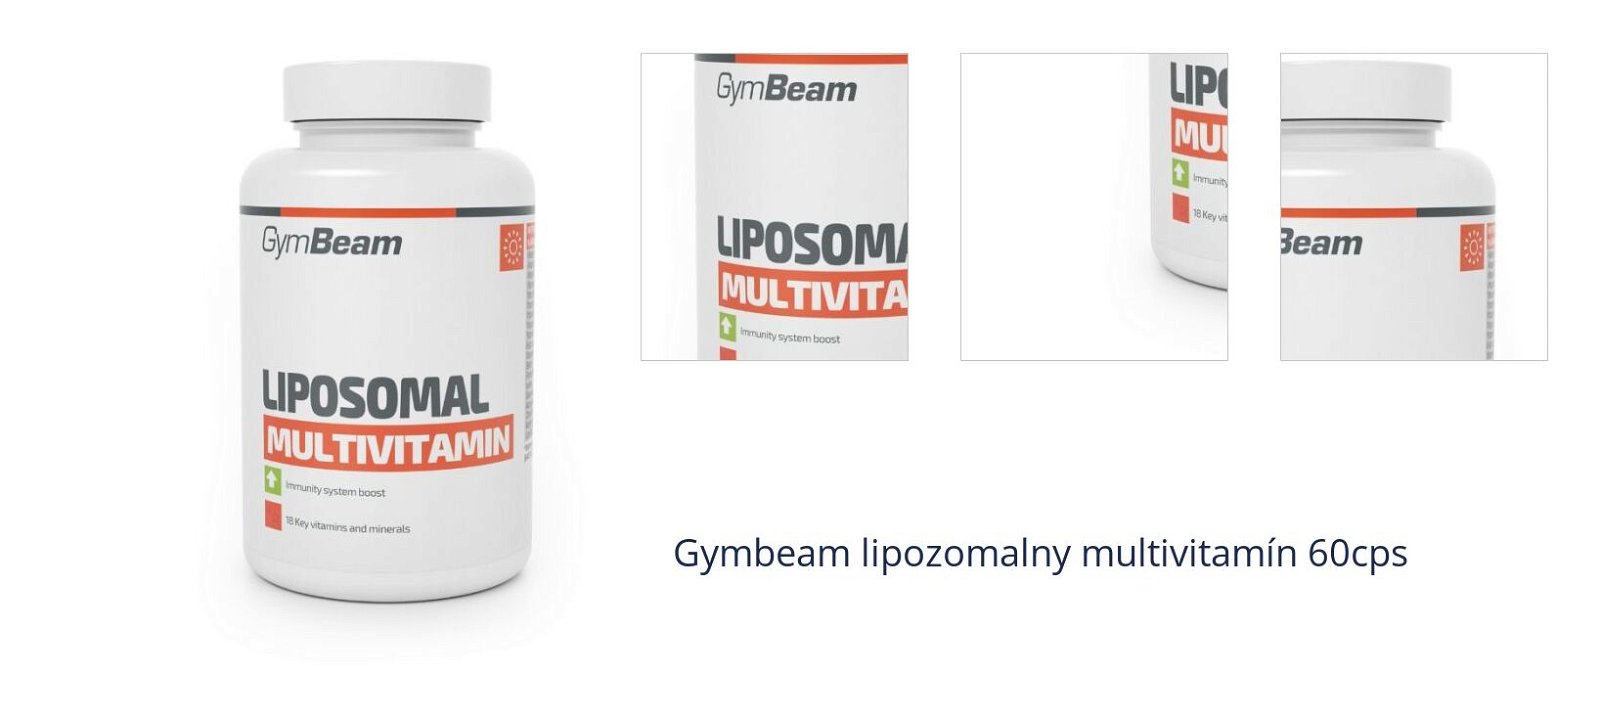 Gymbeam lipozomalny multivitamín 60cps 1